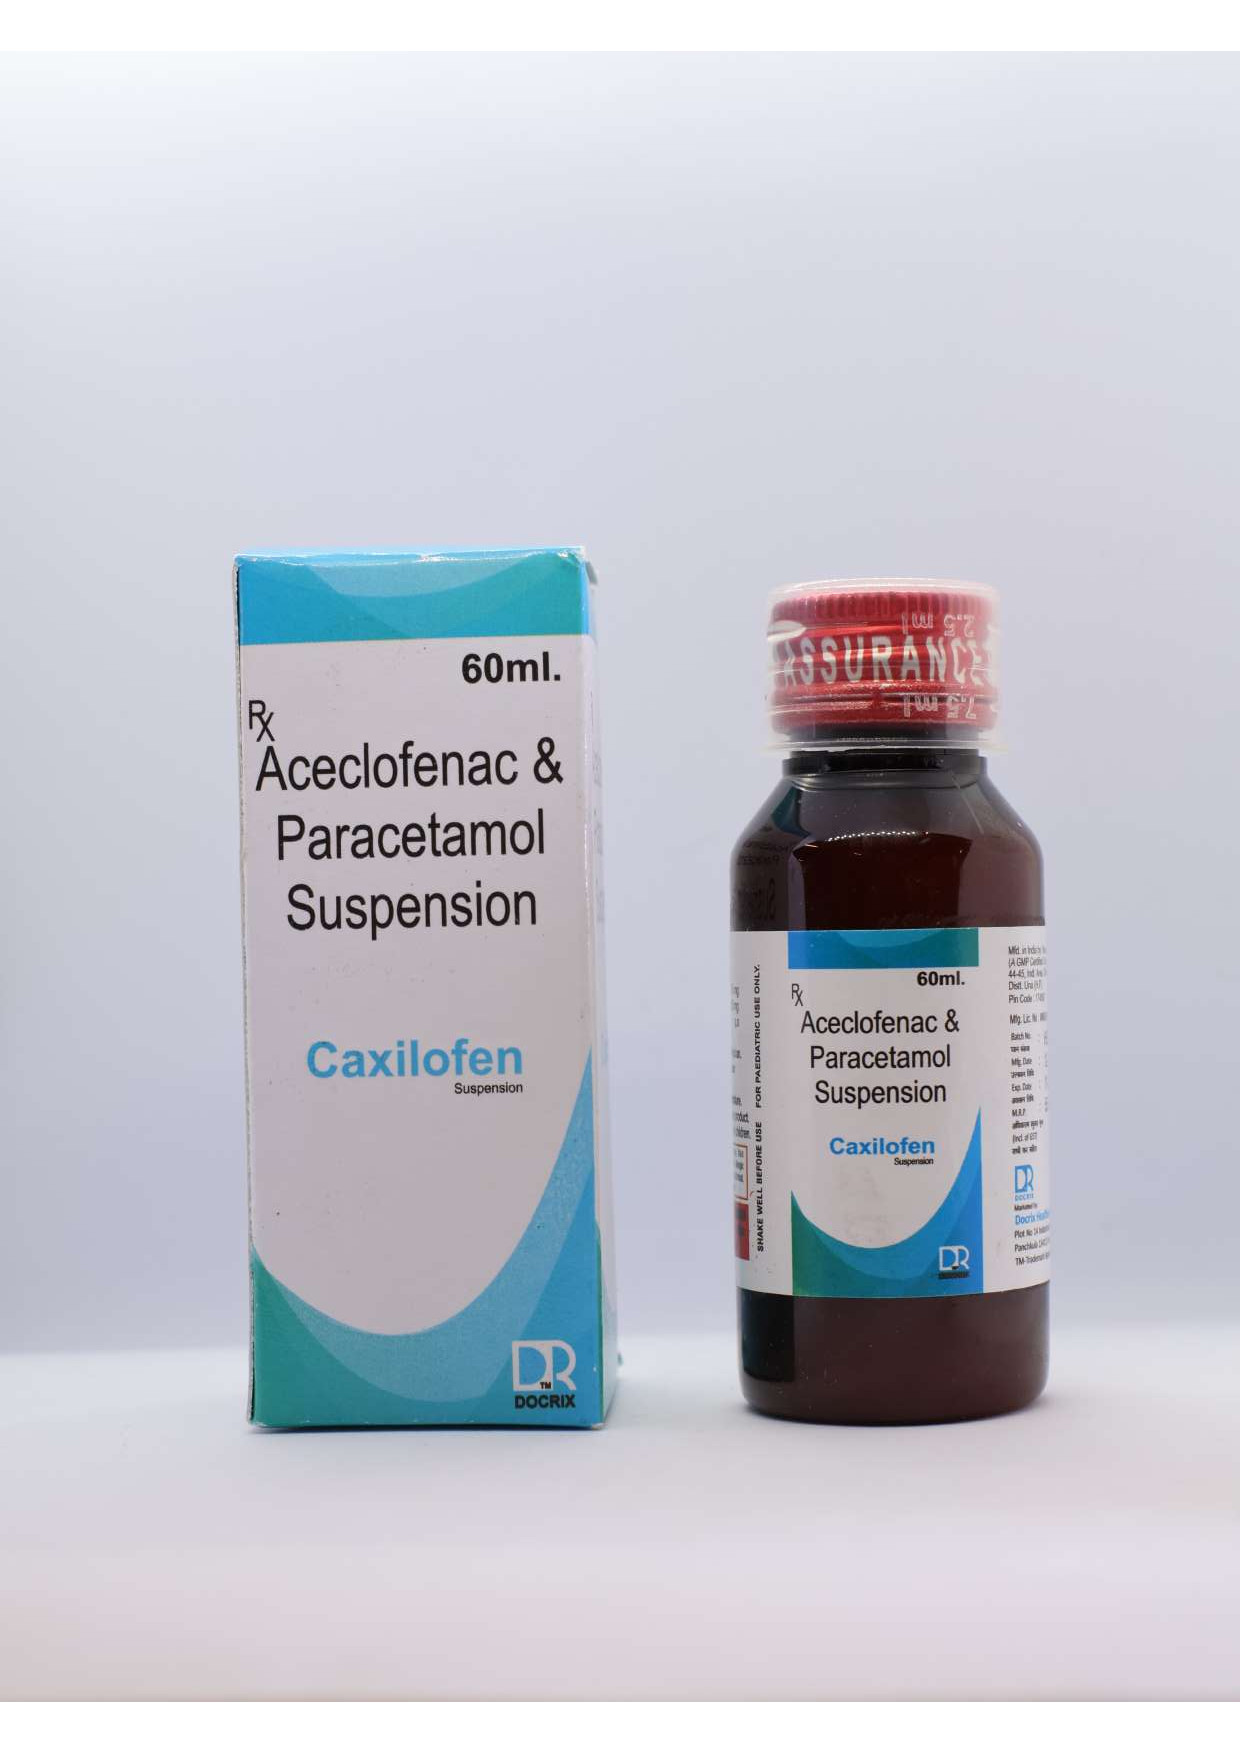 Product Name: Caxilofen, Compositions of Caxilofen are Aceclofenac & Paracetamol Suspension - Docrix Healthcare